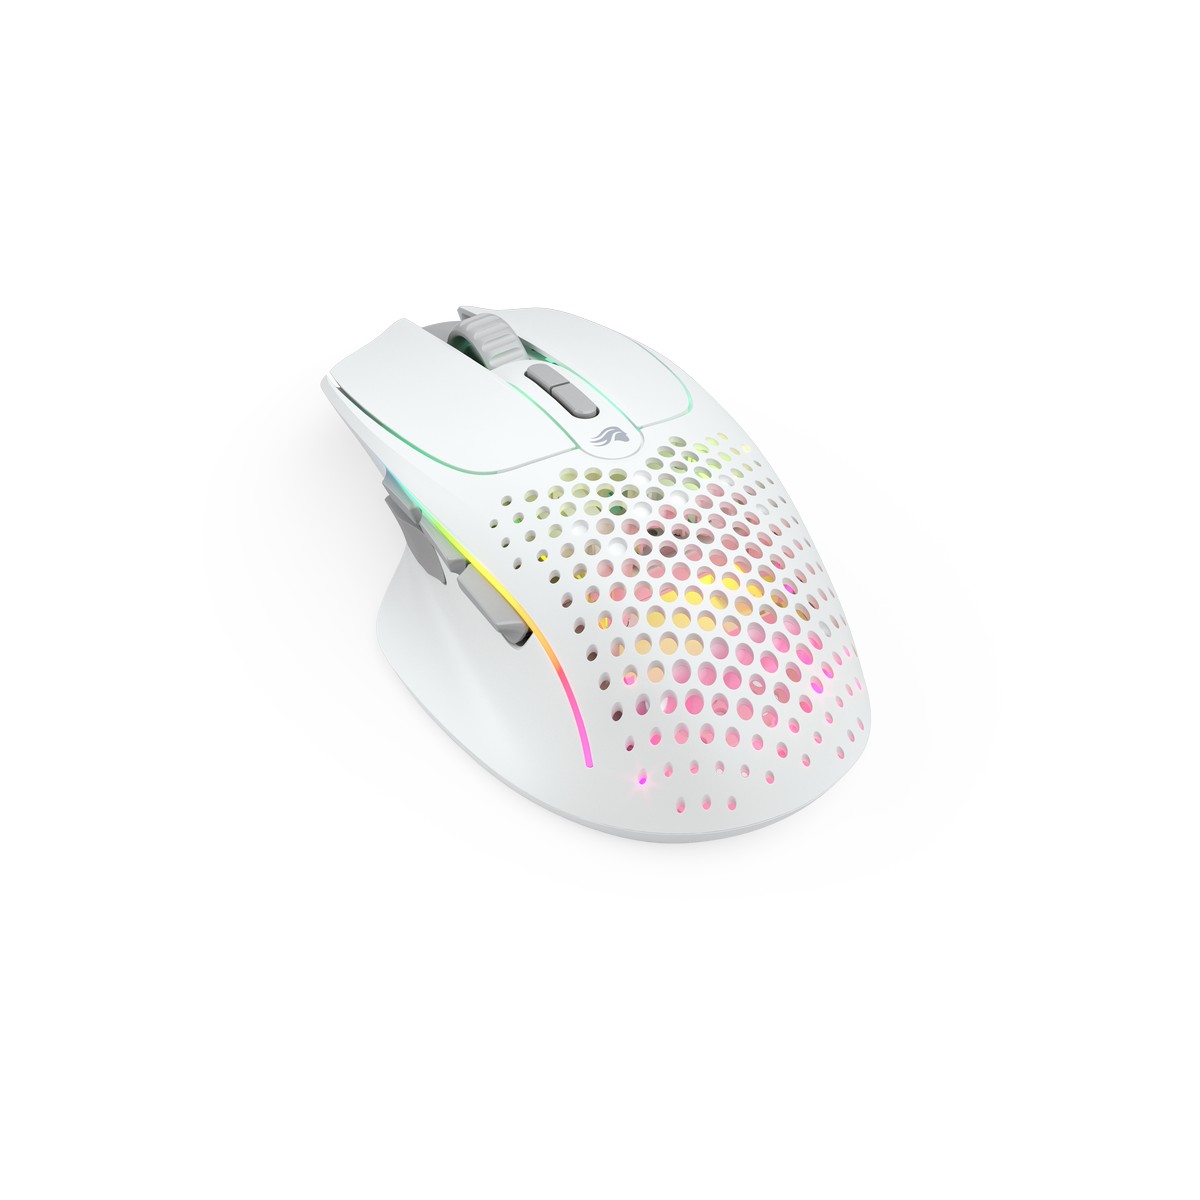 Glorious Model I 2 Wireless RGB Optical Gaming Mouse - Matte White (GLO-MS-IWV2-MW)